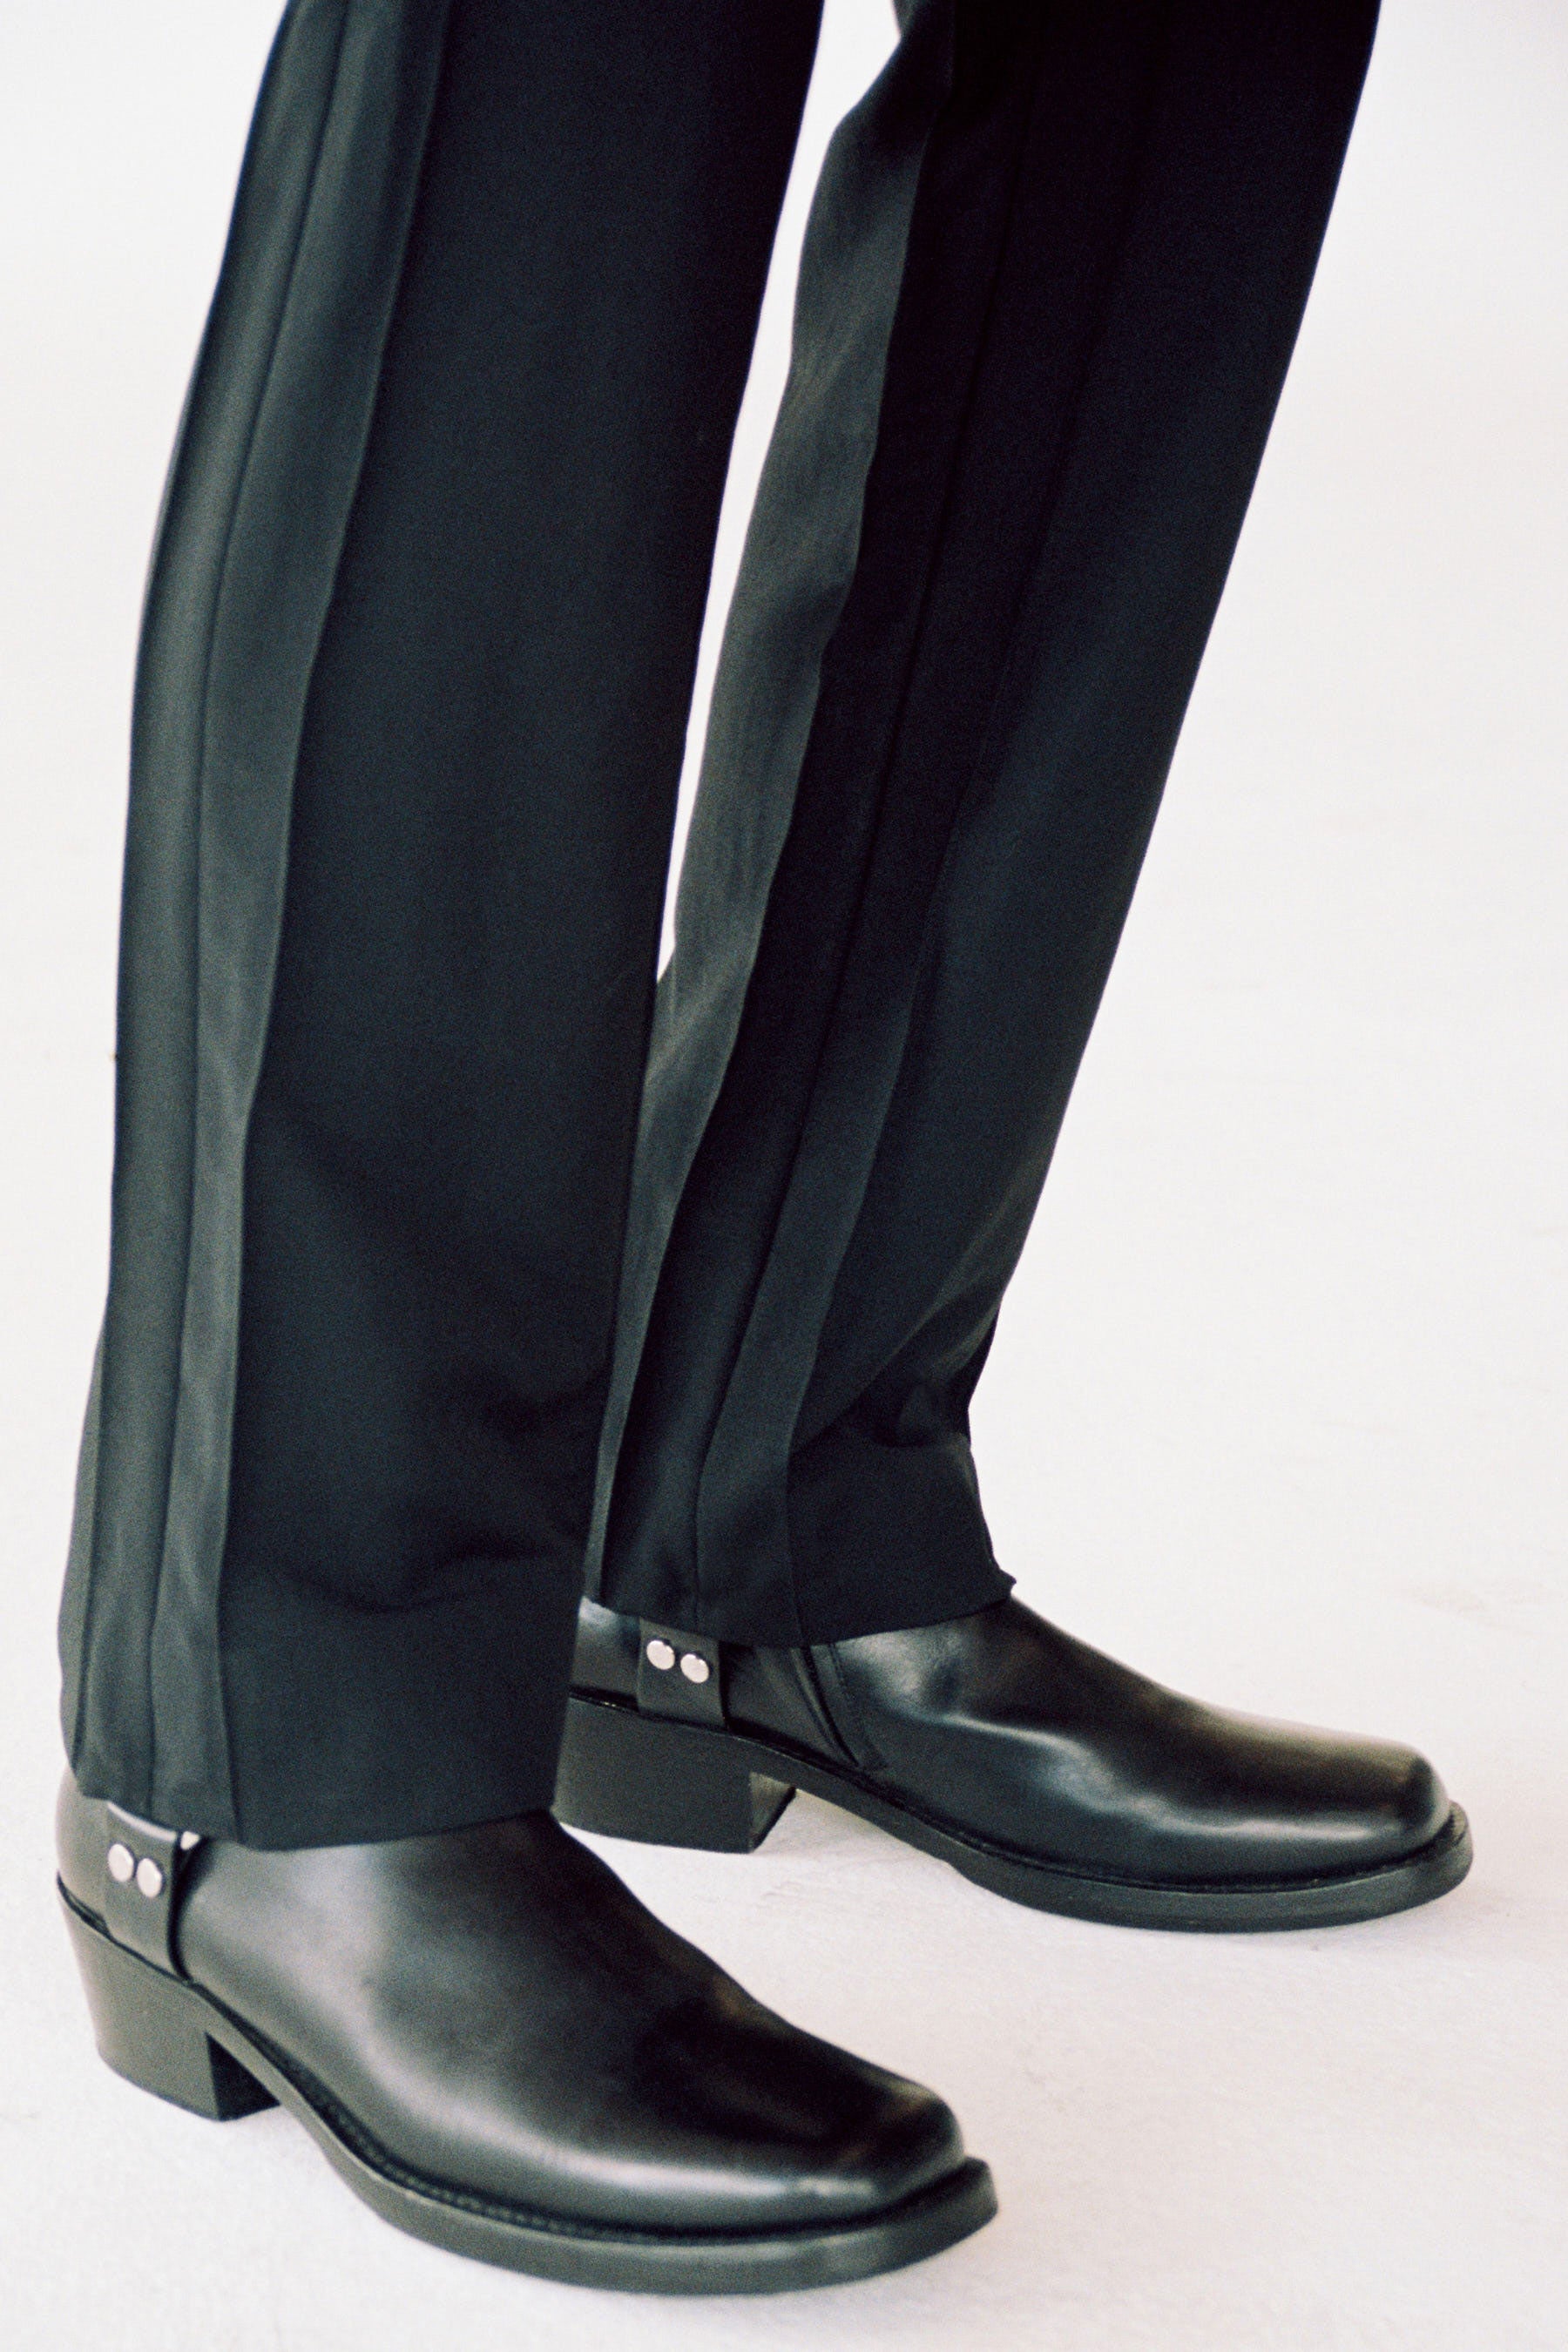 Black Woollen Mohair Cuboid Tailored Pants